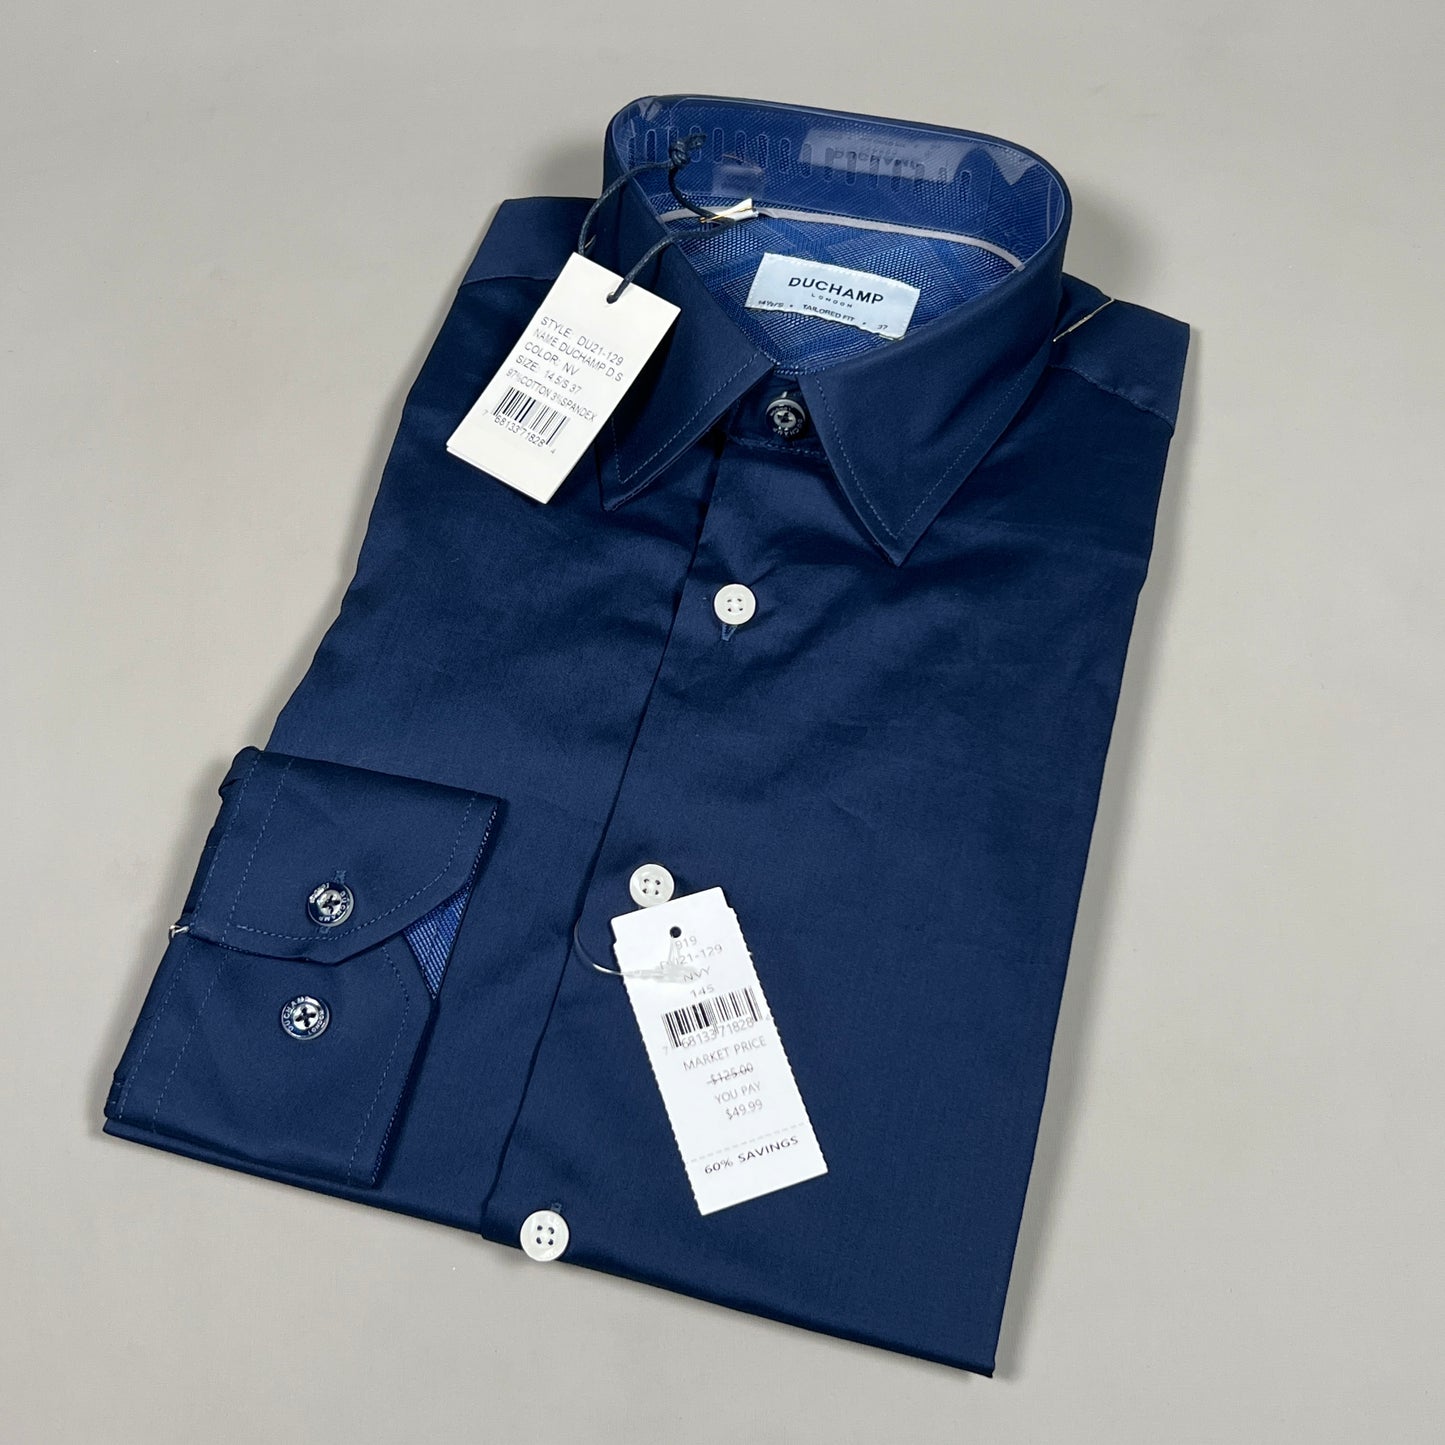 DUCHAMP LONDON Navy Solid Tailored-fit Dress Shirt Men's Sz S / 37 / 14.5 (New)